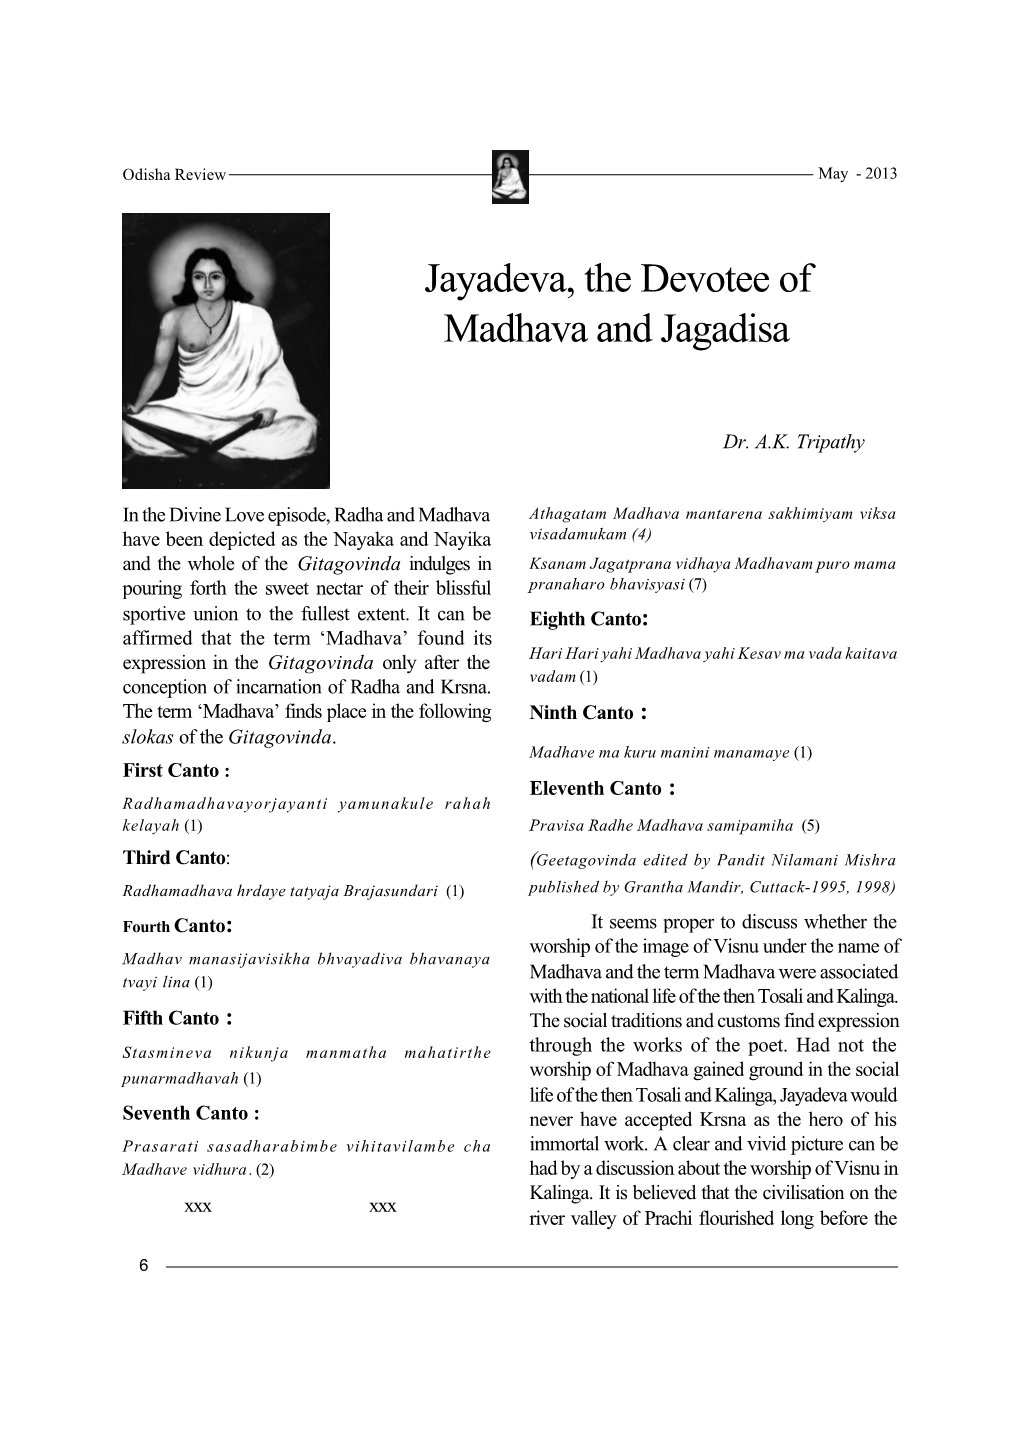 Jayadeva, the Devotee of Madhava and Jagadisa